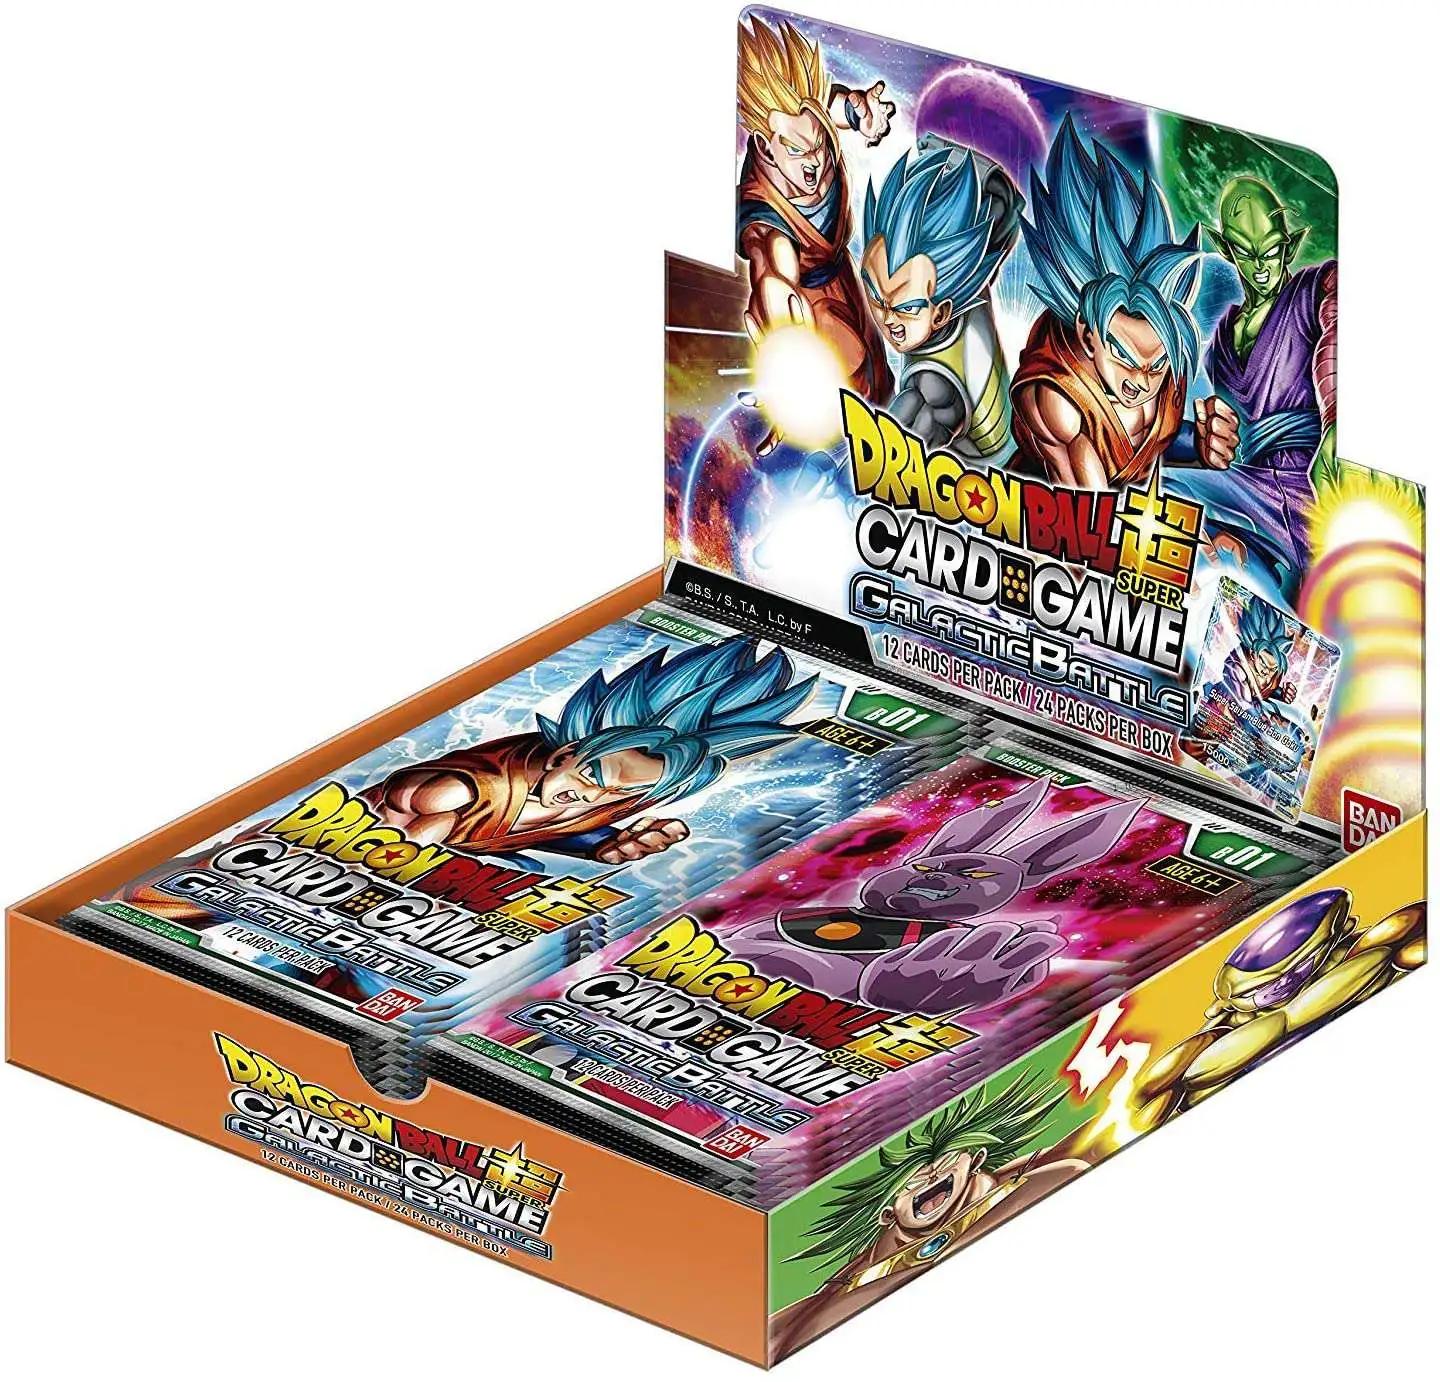 Dragonball Super Card Game Galactic Battle English sealed box 24 packs 12 